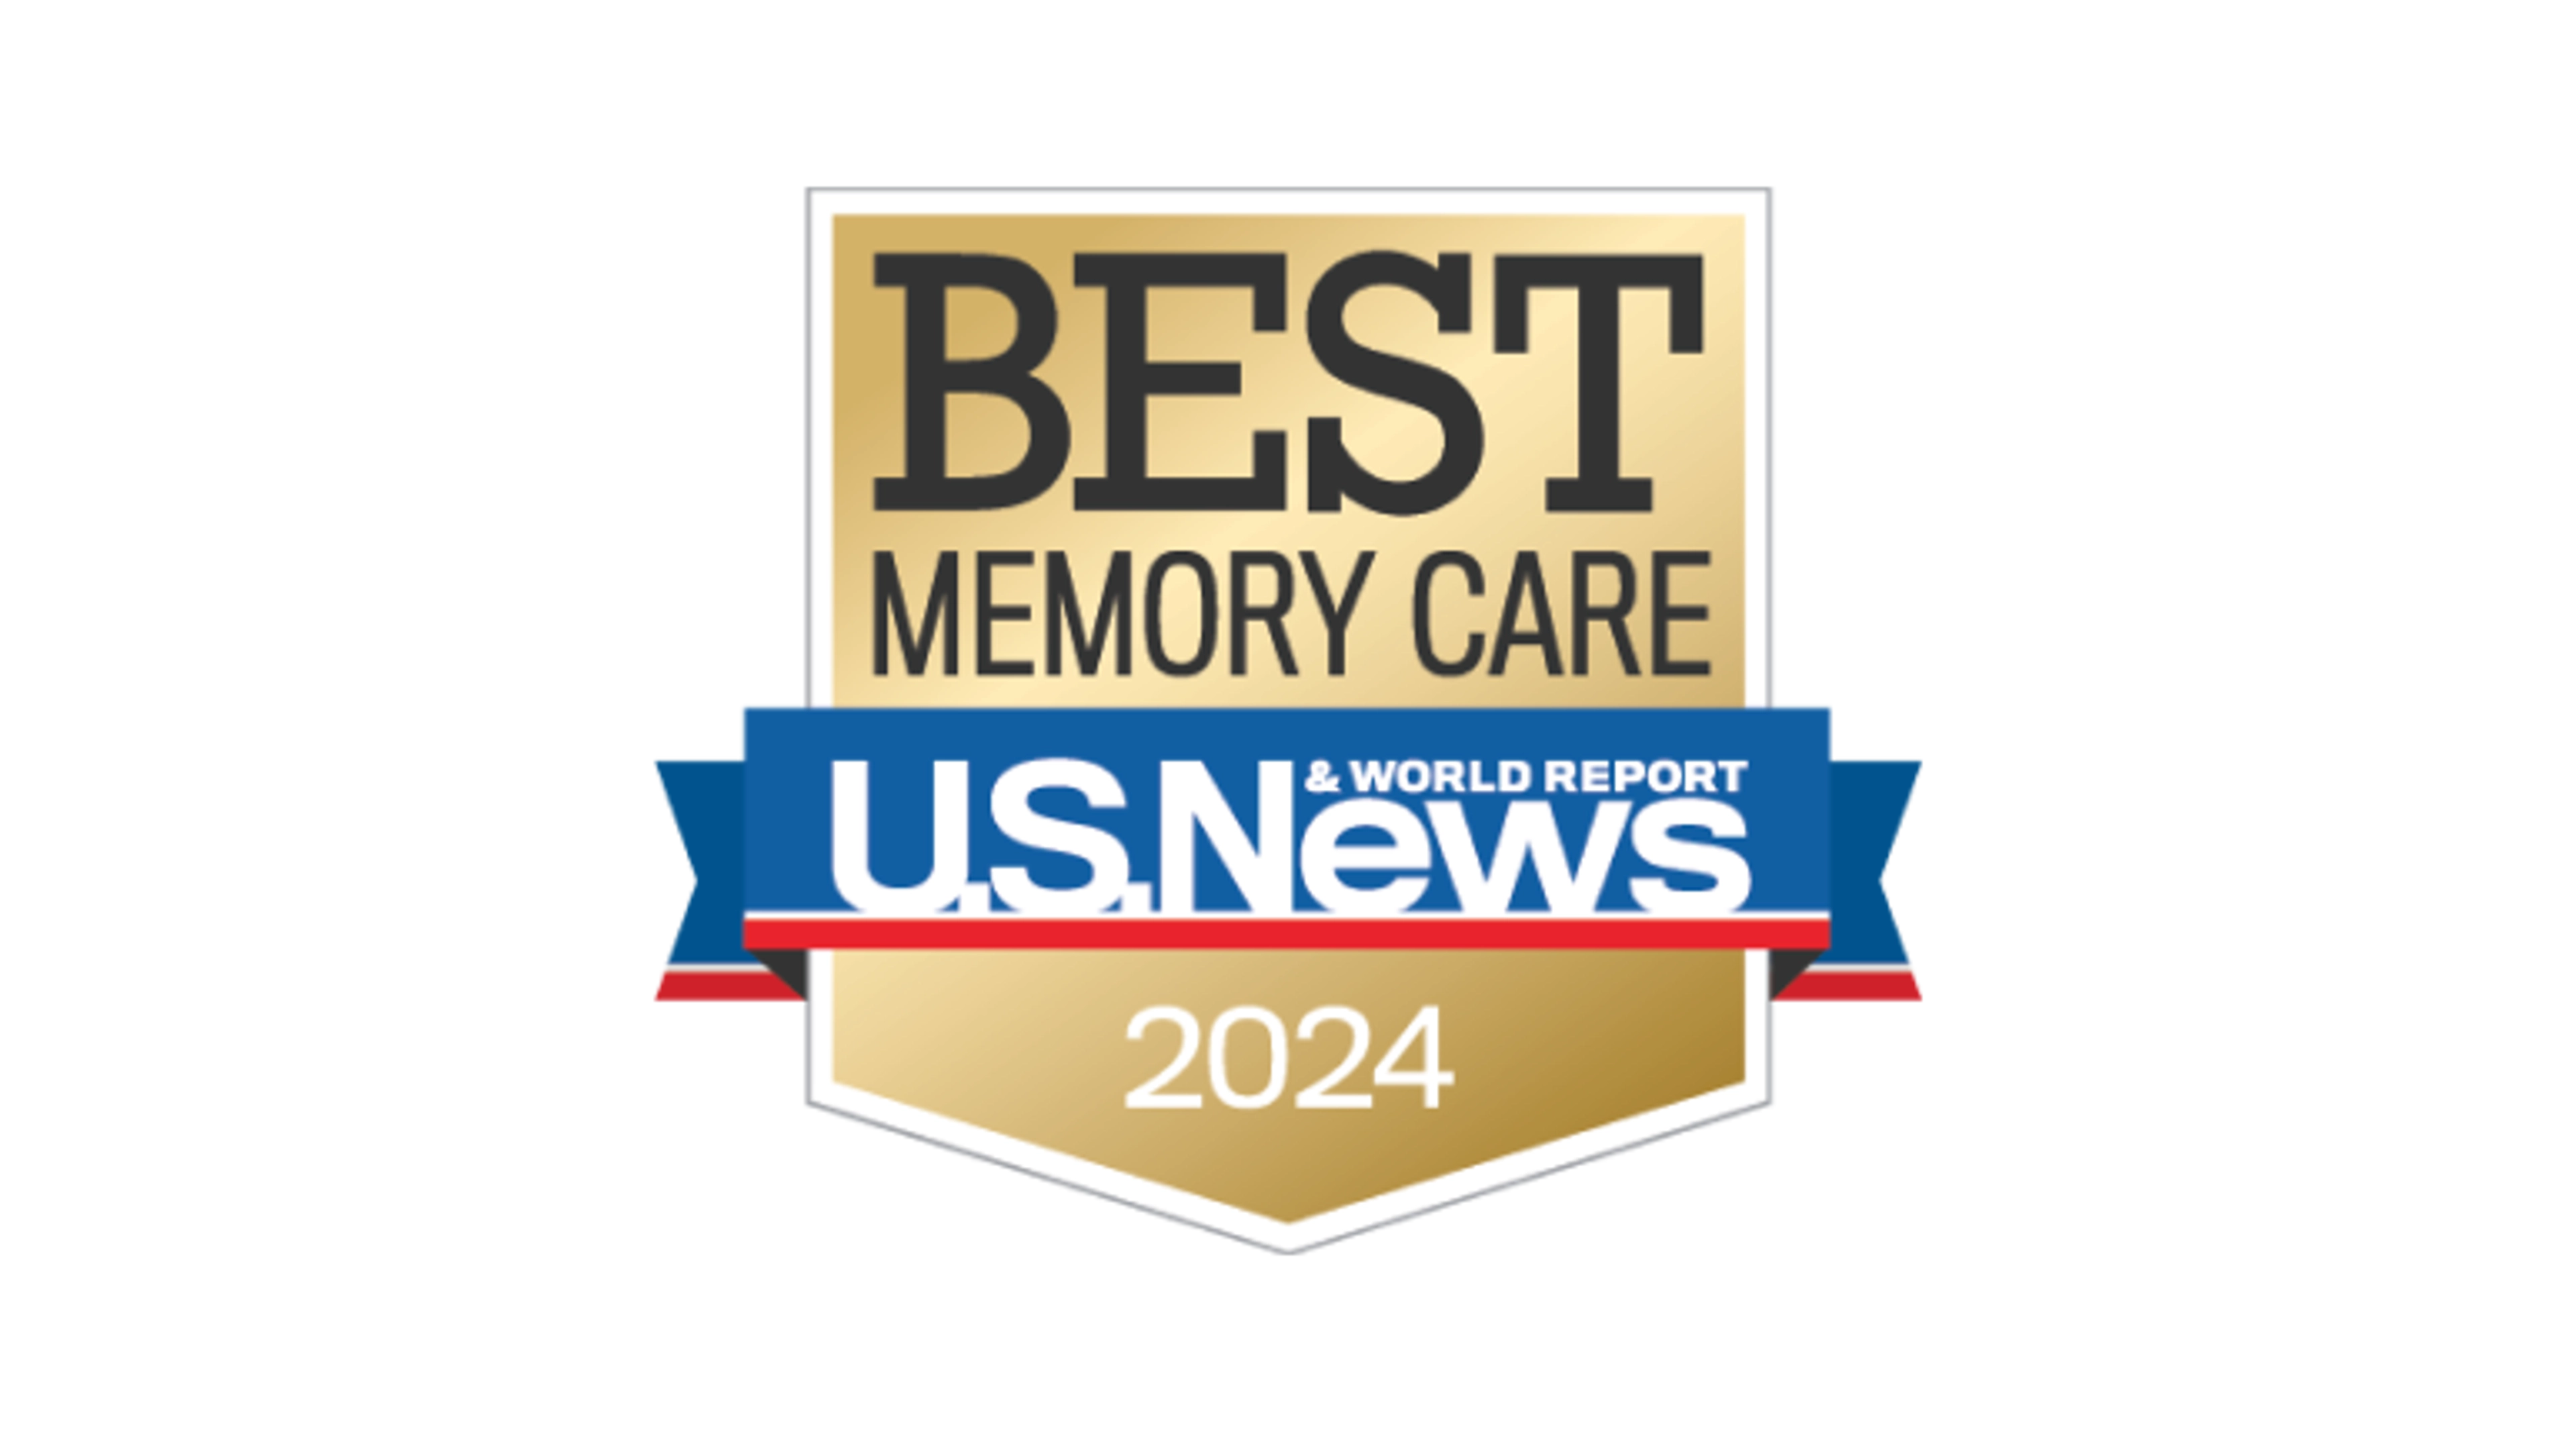 Best Memory Care 2024